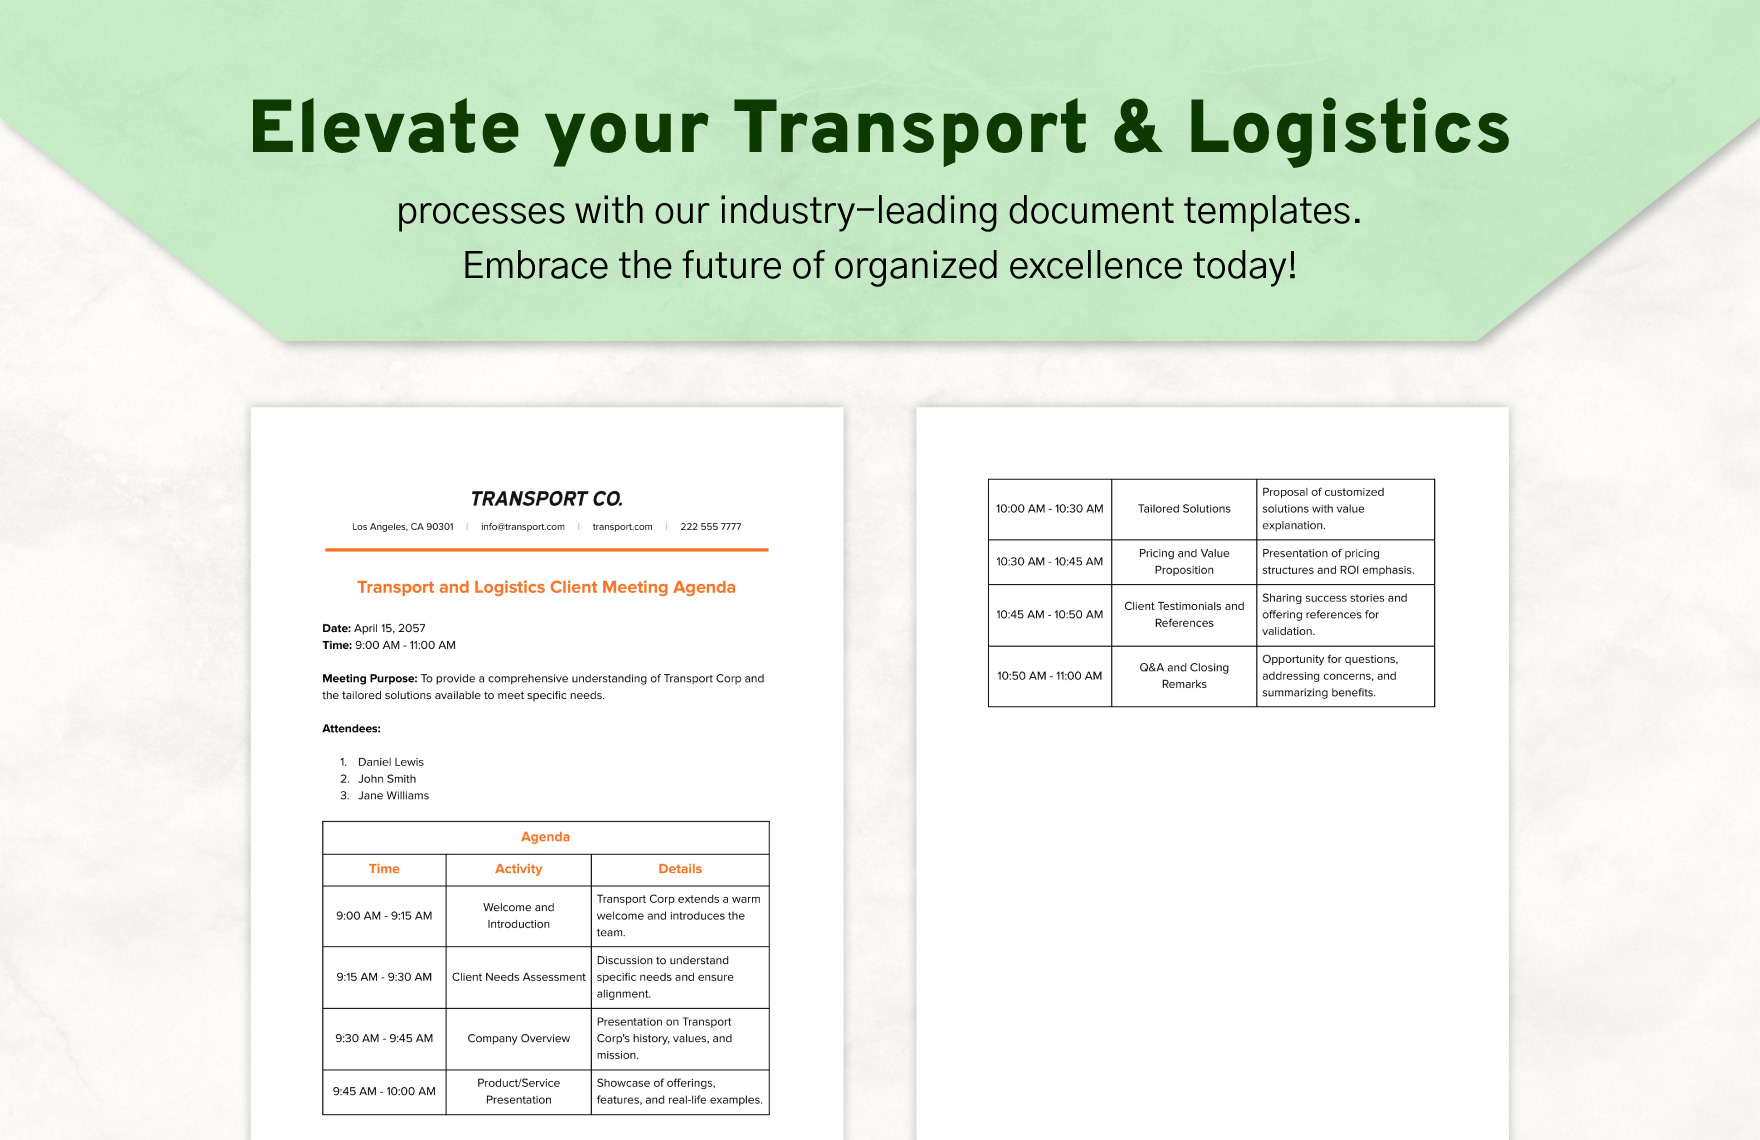 Transport and Logistics Client Meeting Agenda Template